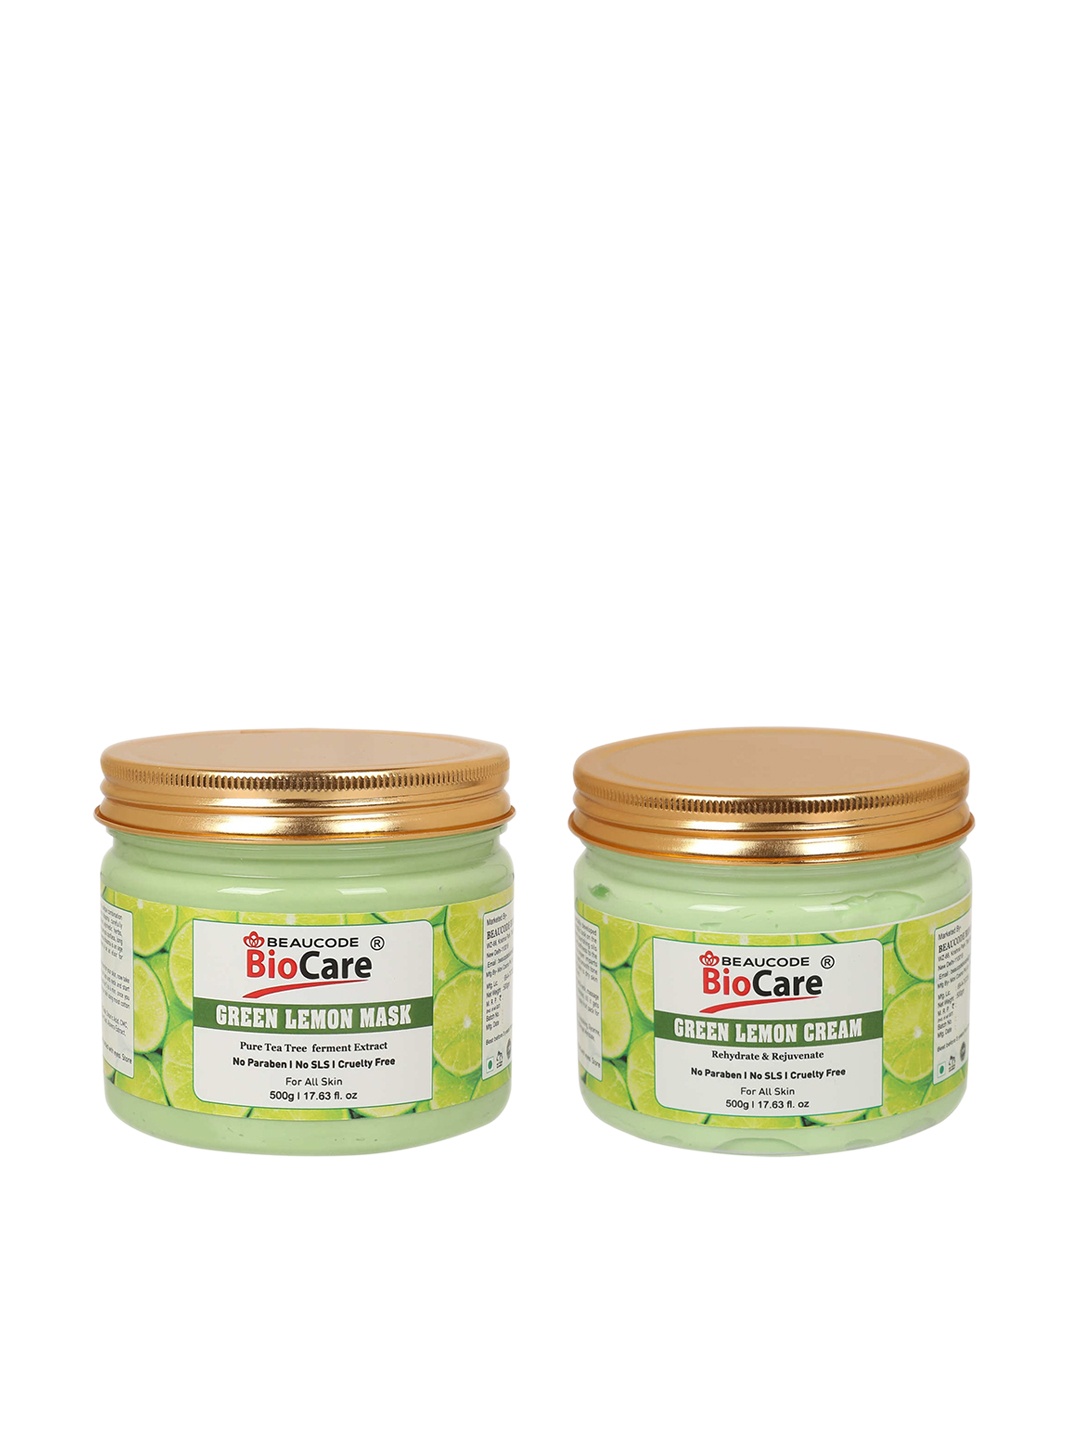 

BEAUCODE BIOCARE Set of Green Lemon Mask & Cream for All Skin Types - 500g each, Lime green